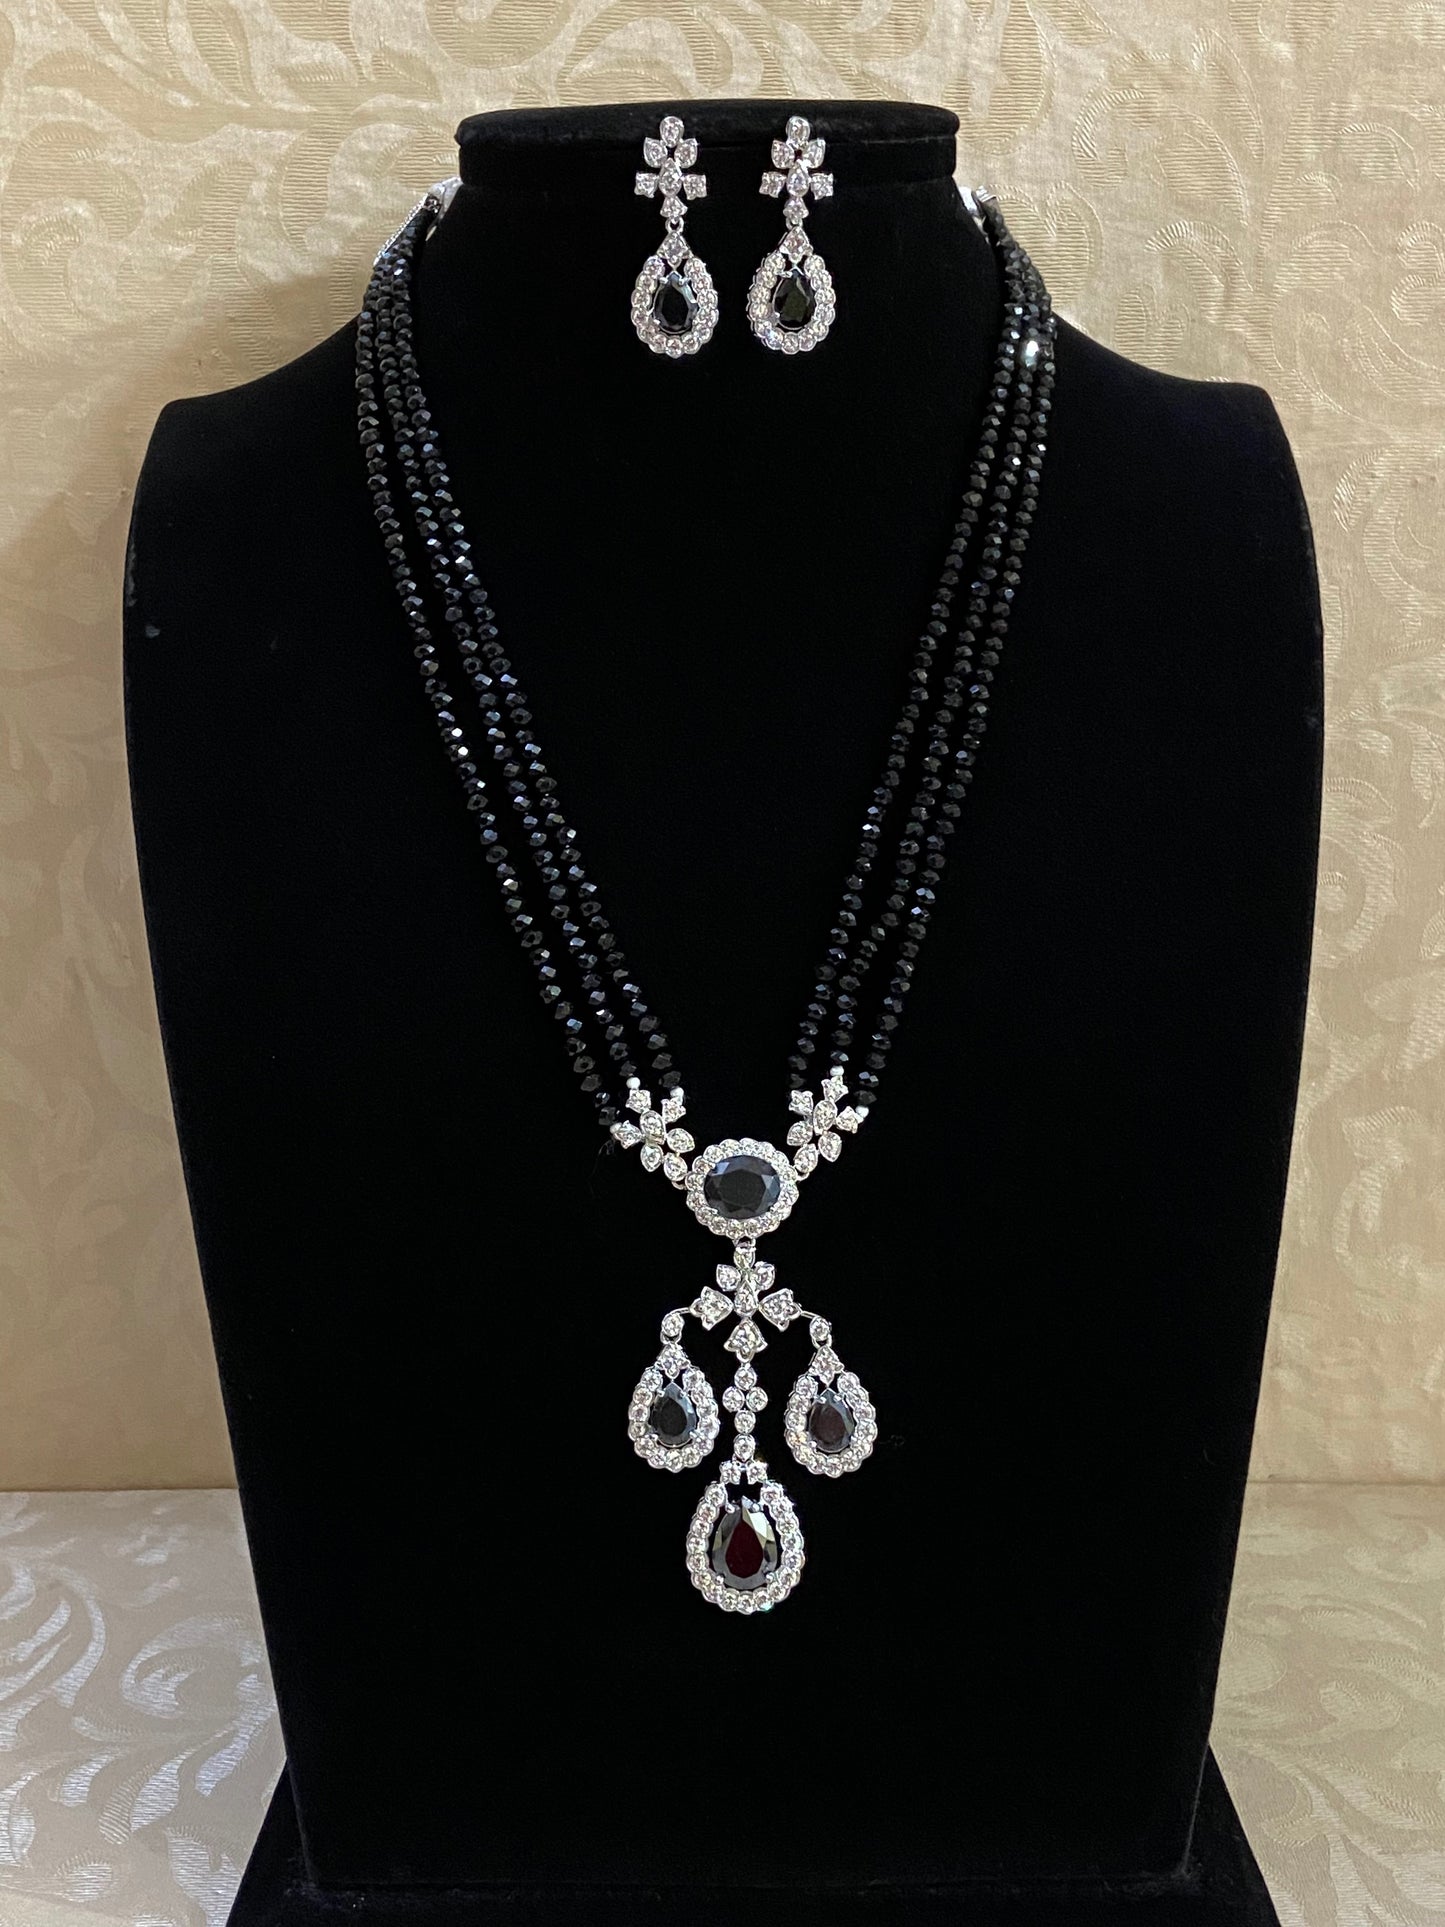 Diamond look pendant necklace | AD pendant necklace | Indian necklace